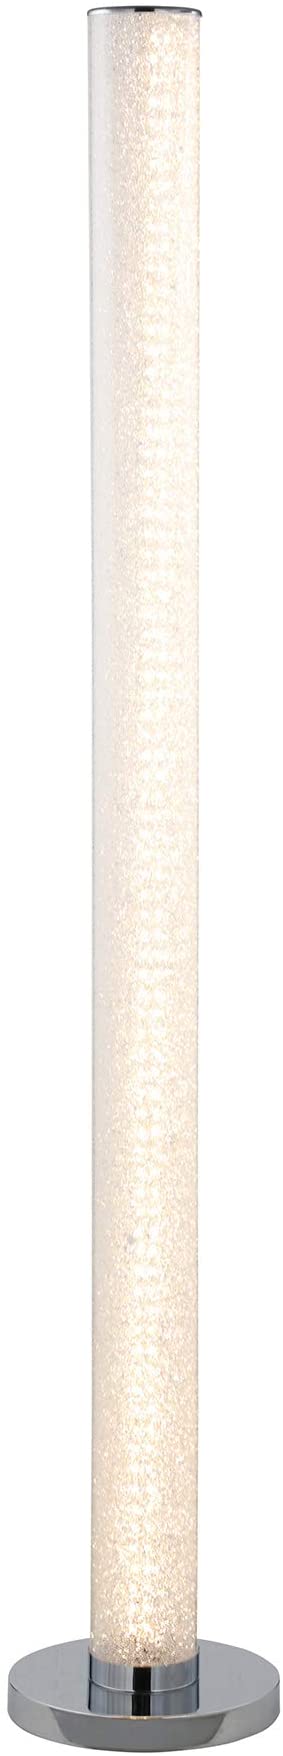 Ore International HBL2111 LED Illuminari White Crystal Sandrocks Column Floor Lamp, Clear